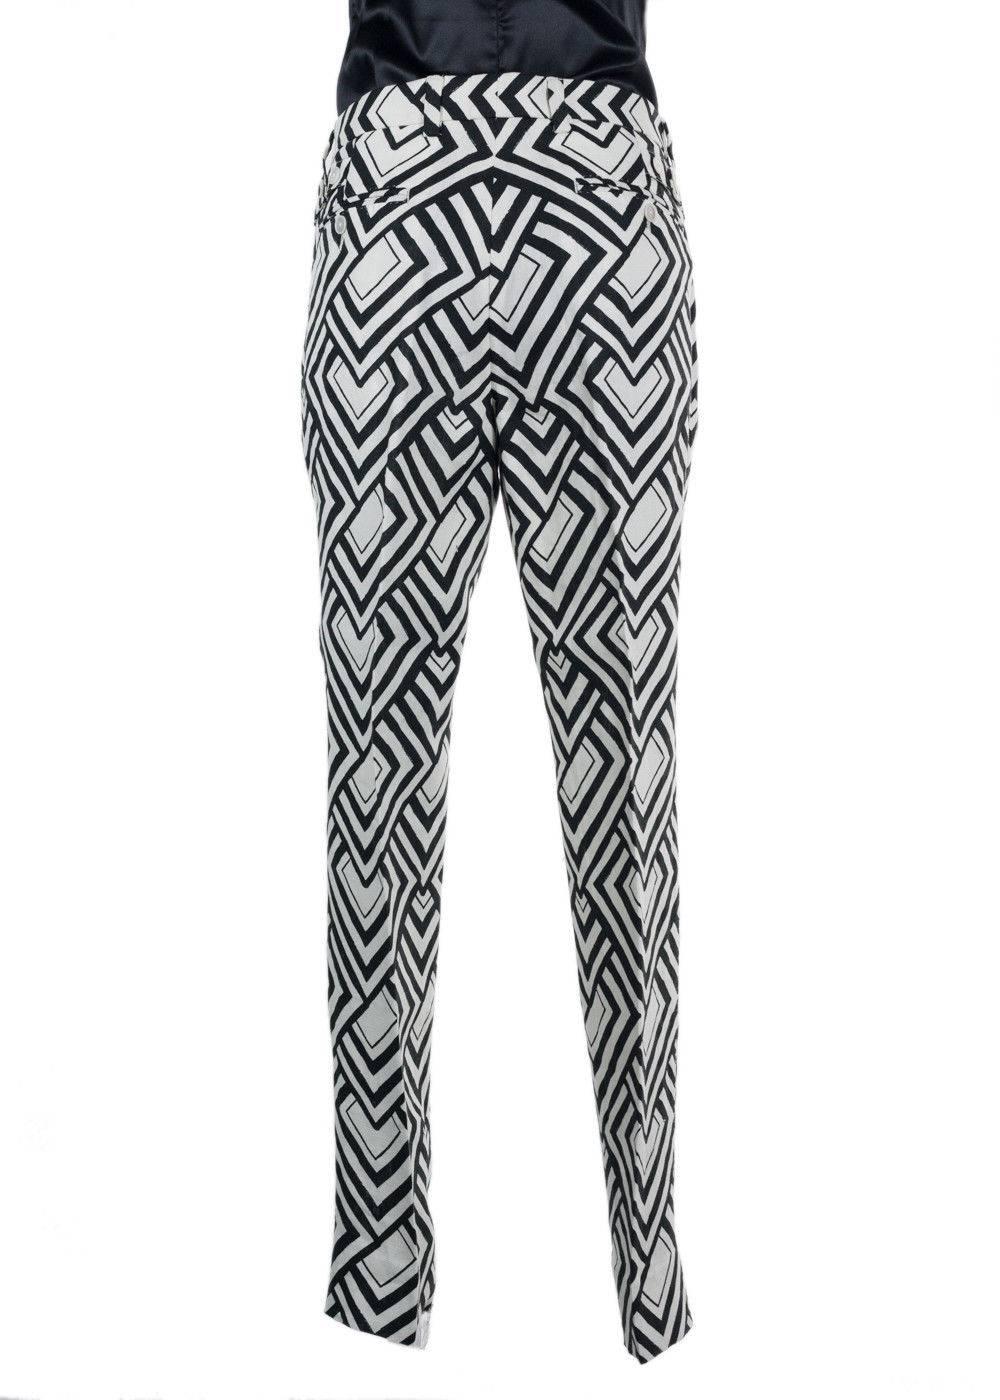 Dolce&Gabbana Men's Black & White Printed Linen Pants 1